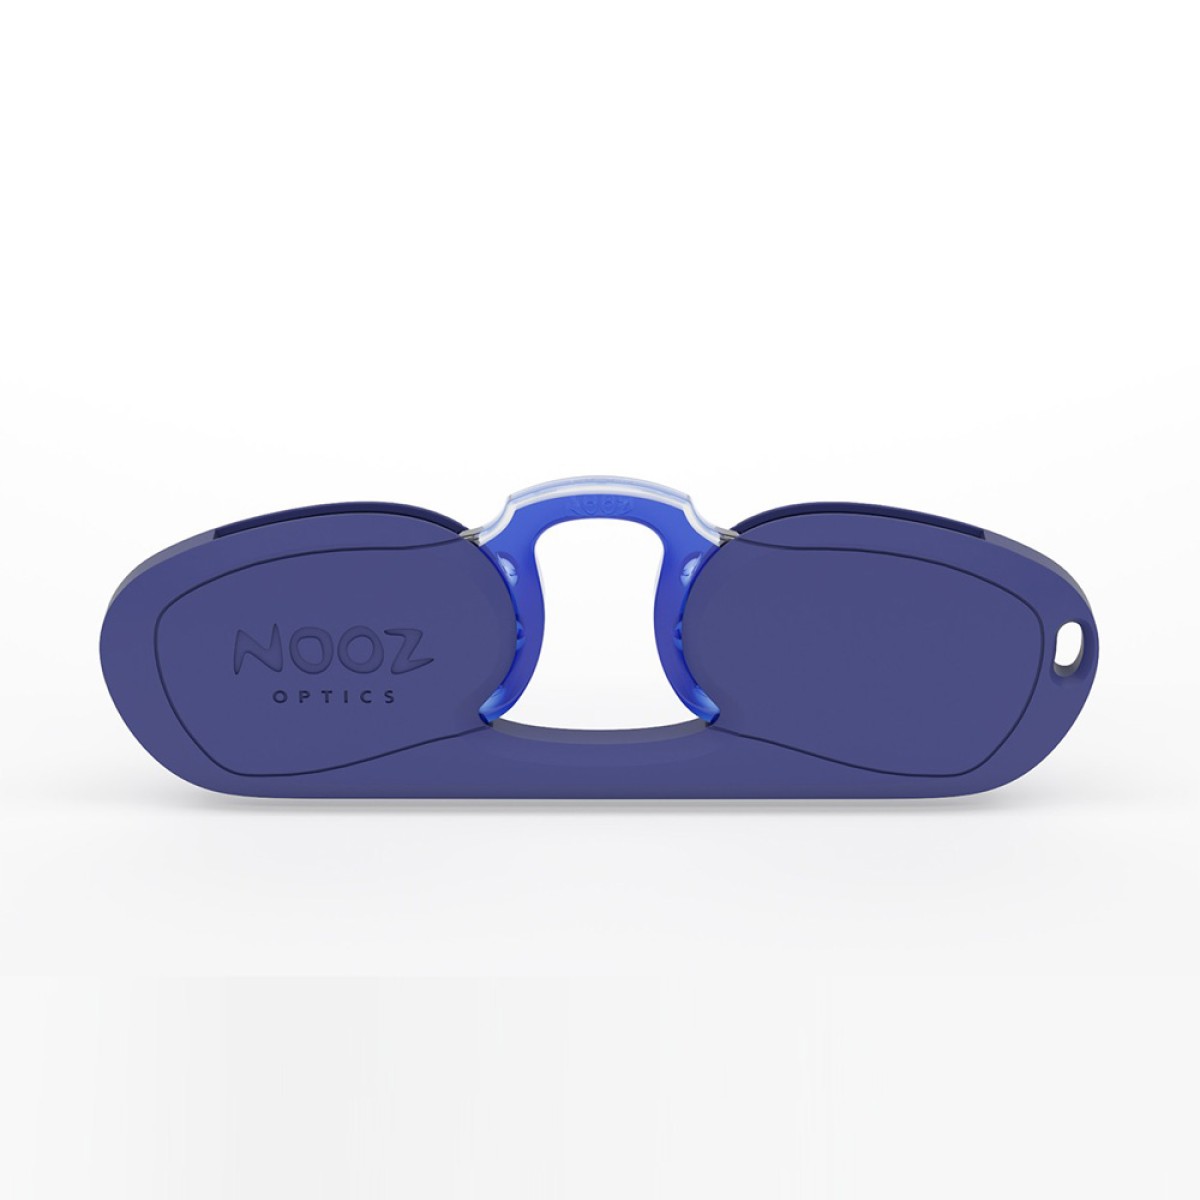 Nooz - Reading glasses - Rectangular - Navy Blue